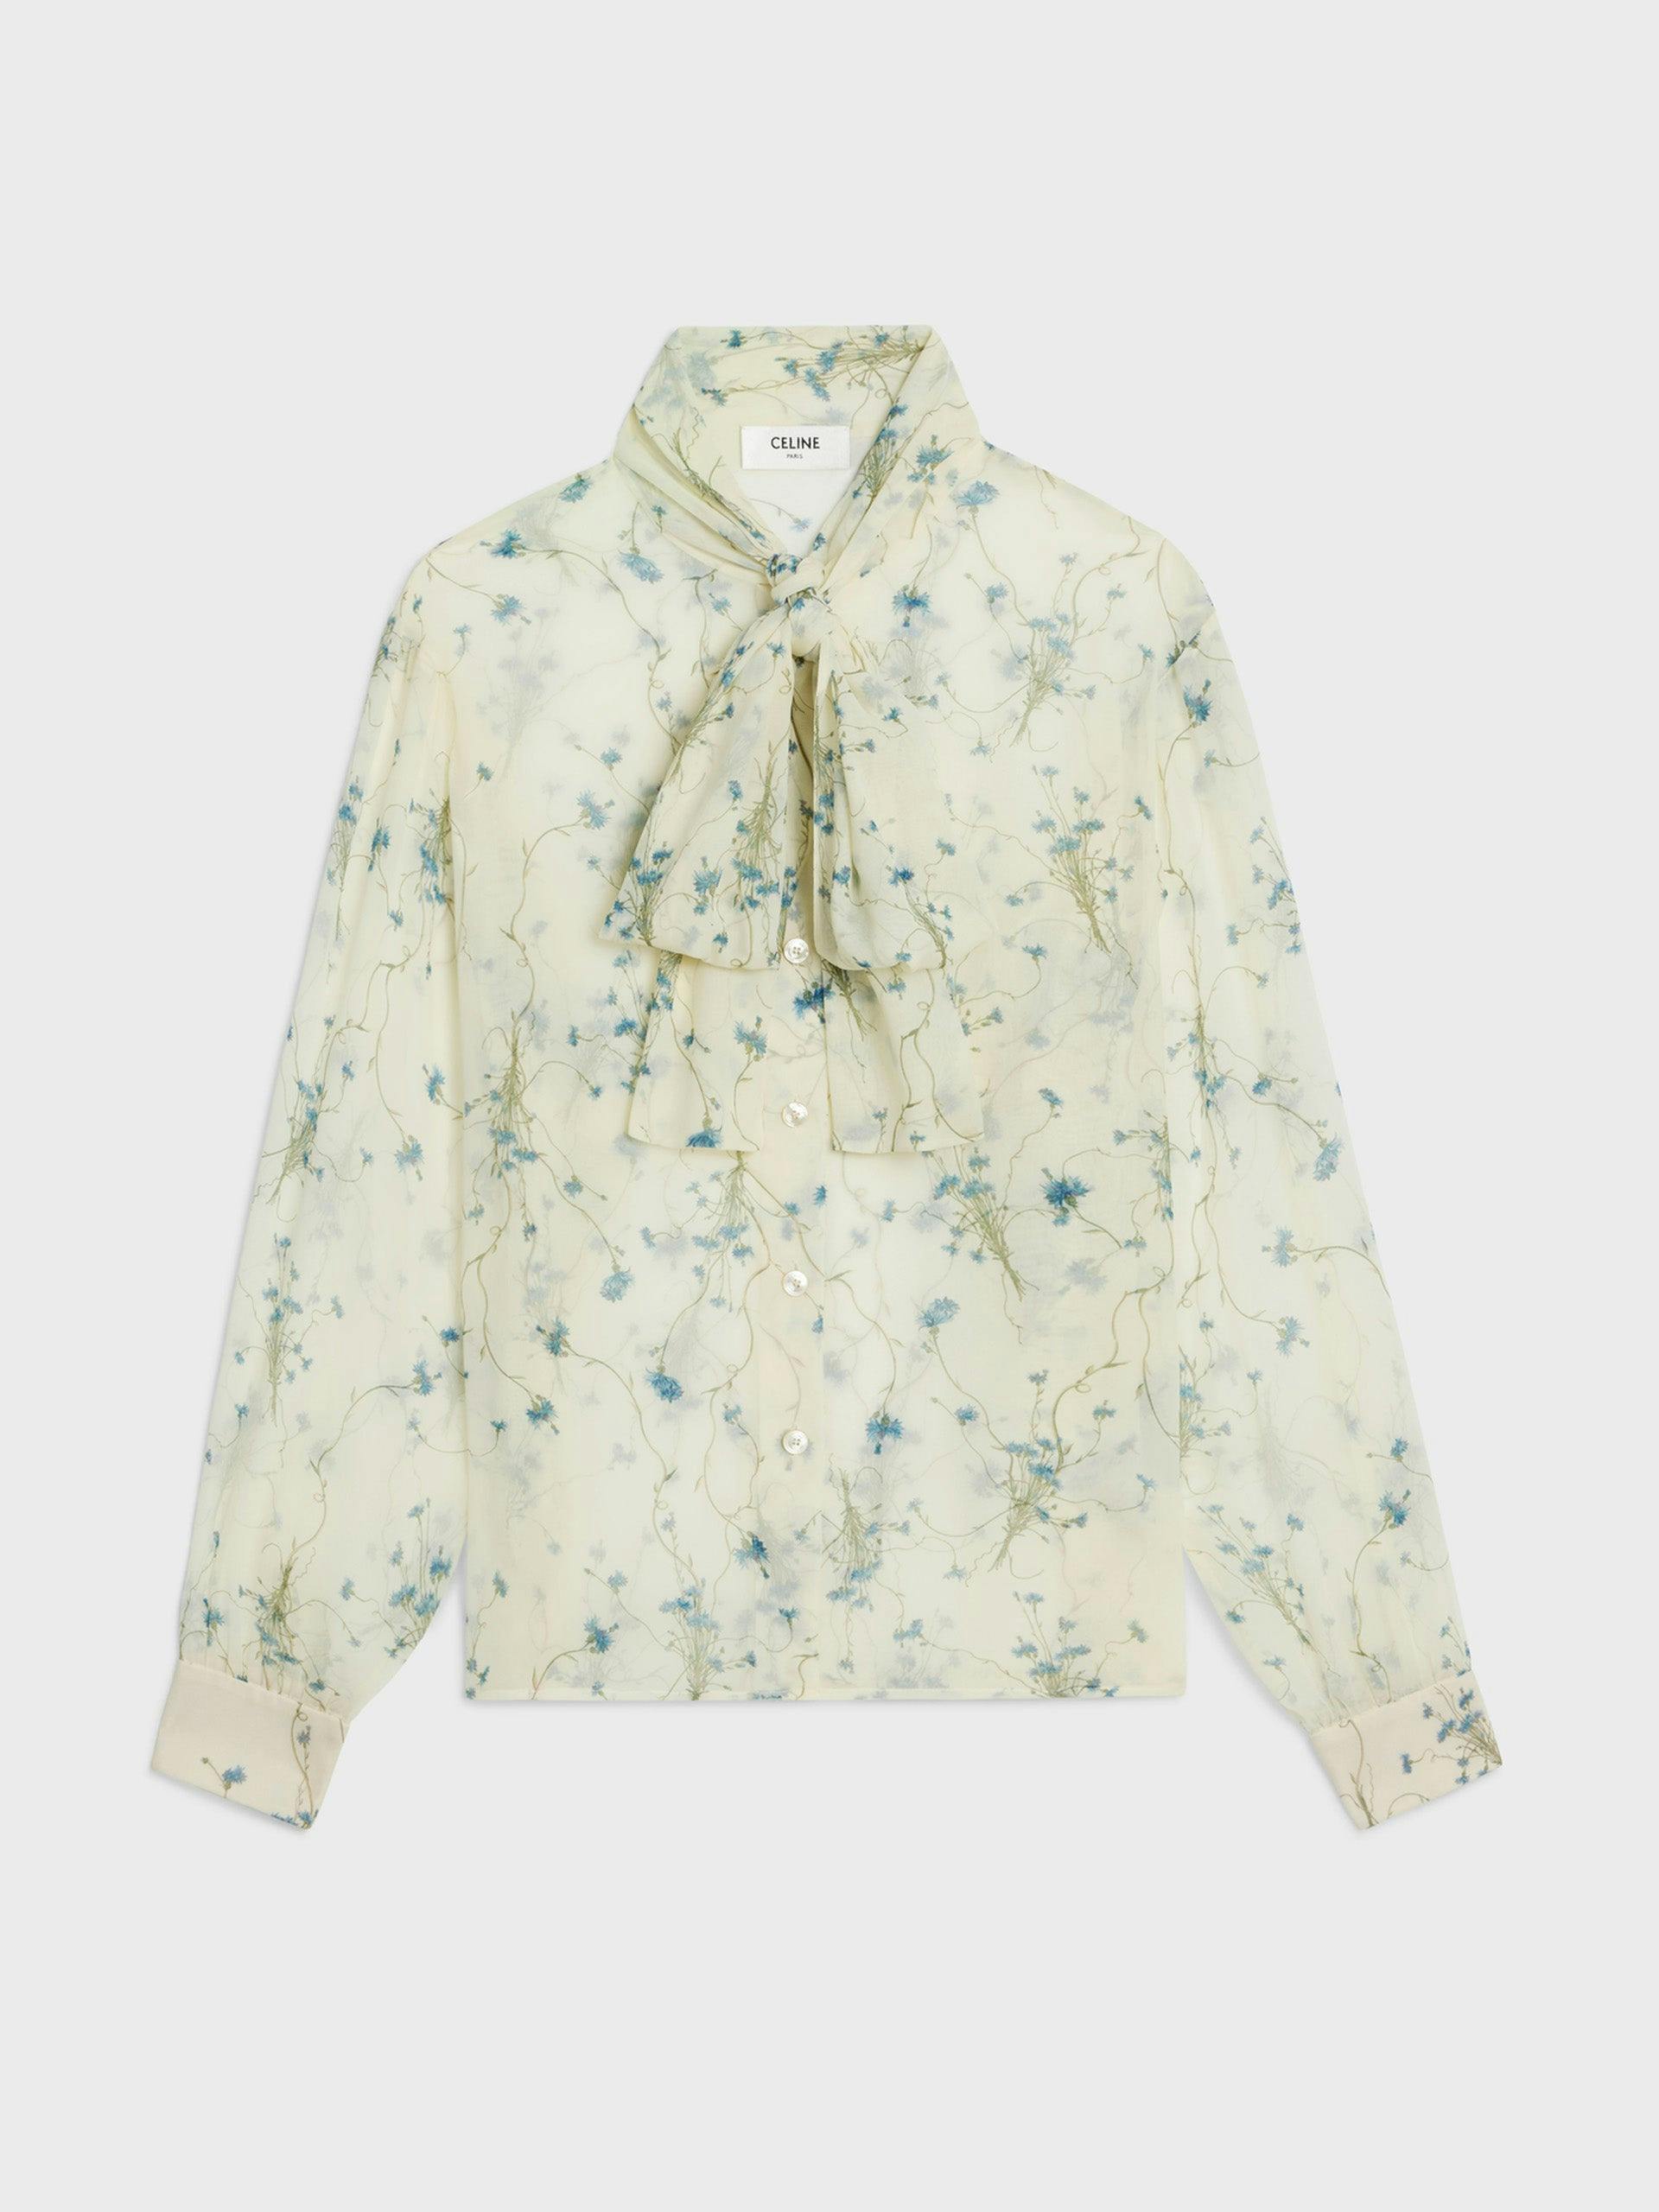 Lavallière blouse in foliage print in silk georgette